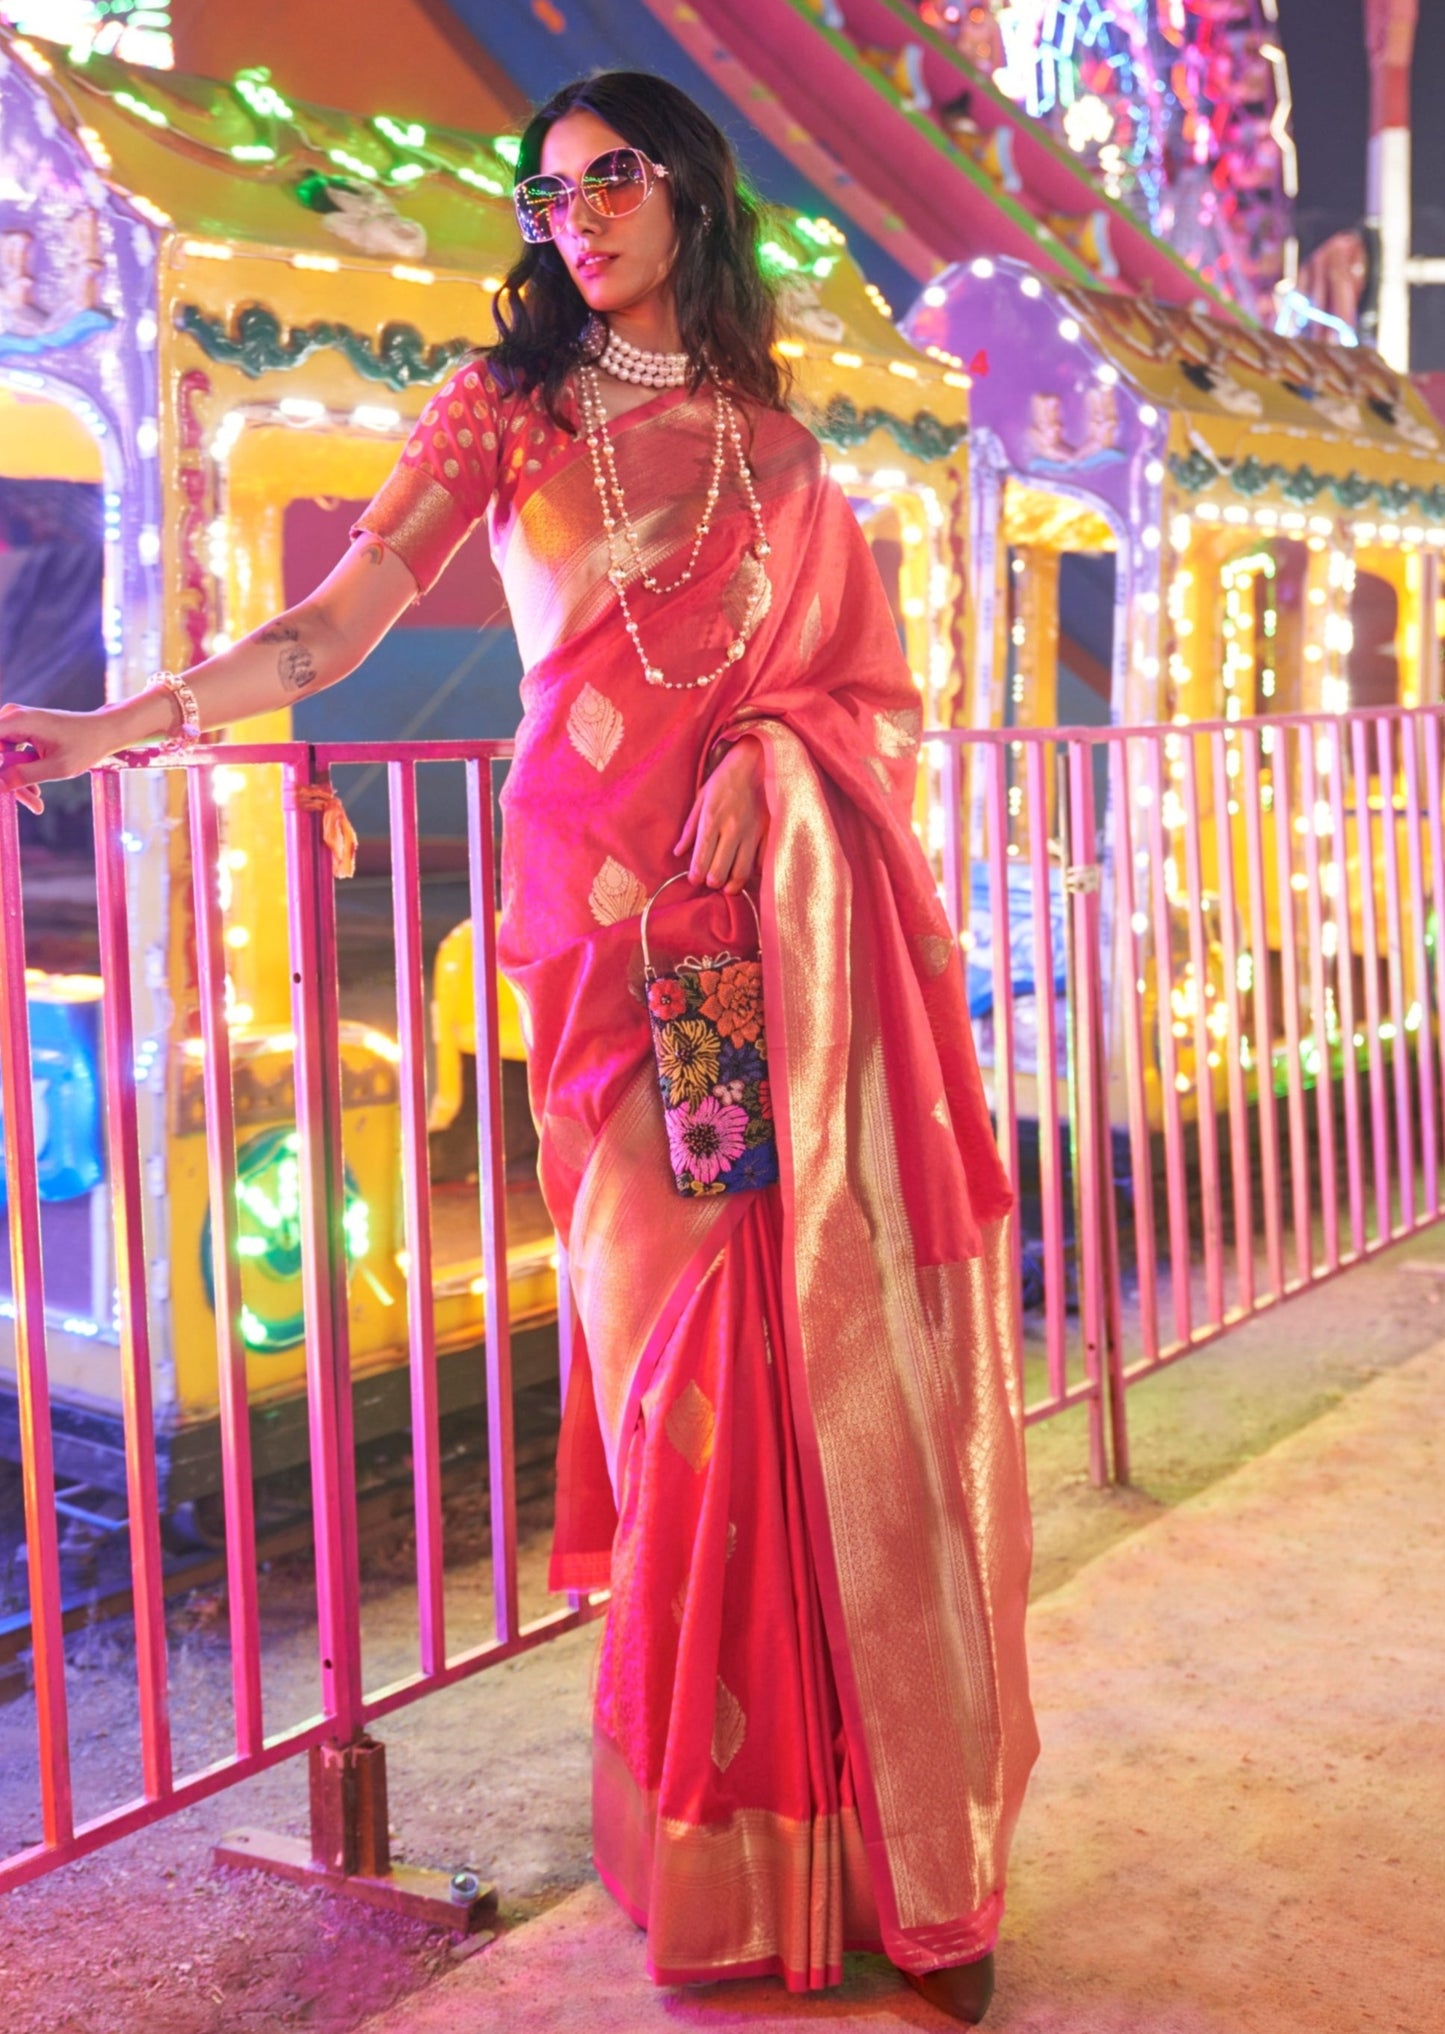 Banarasi handloom silk vermillion red saree for bride.